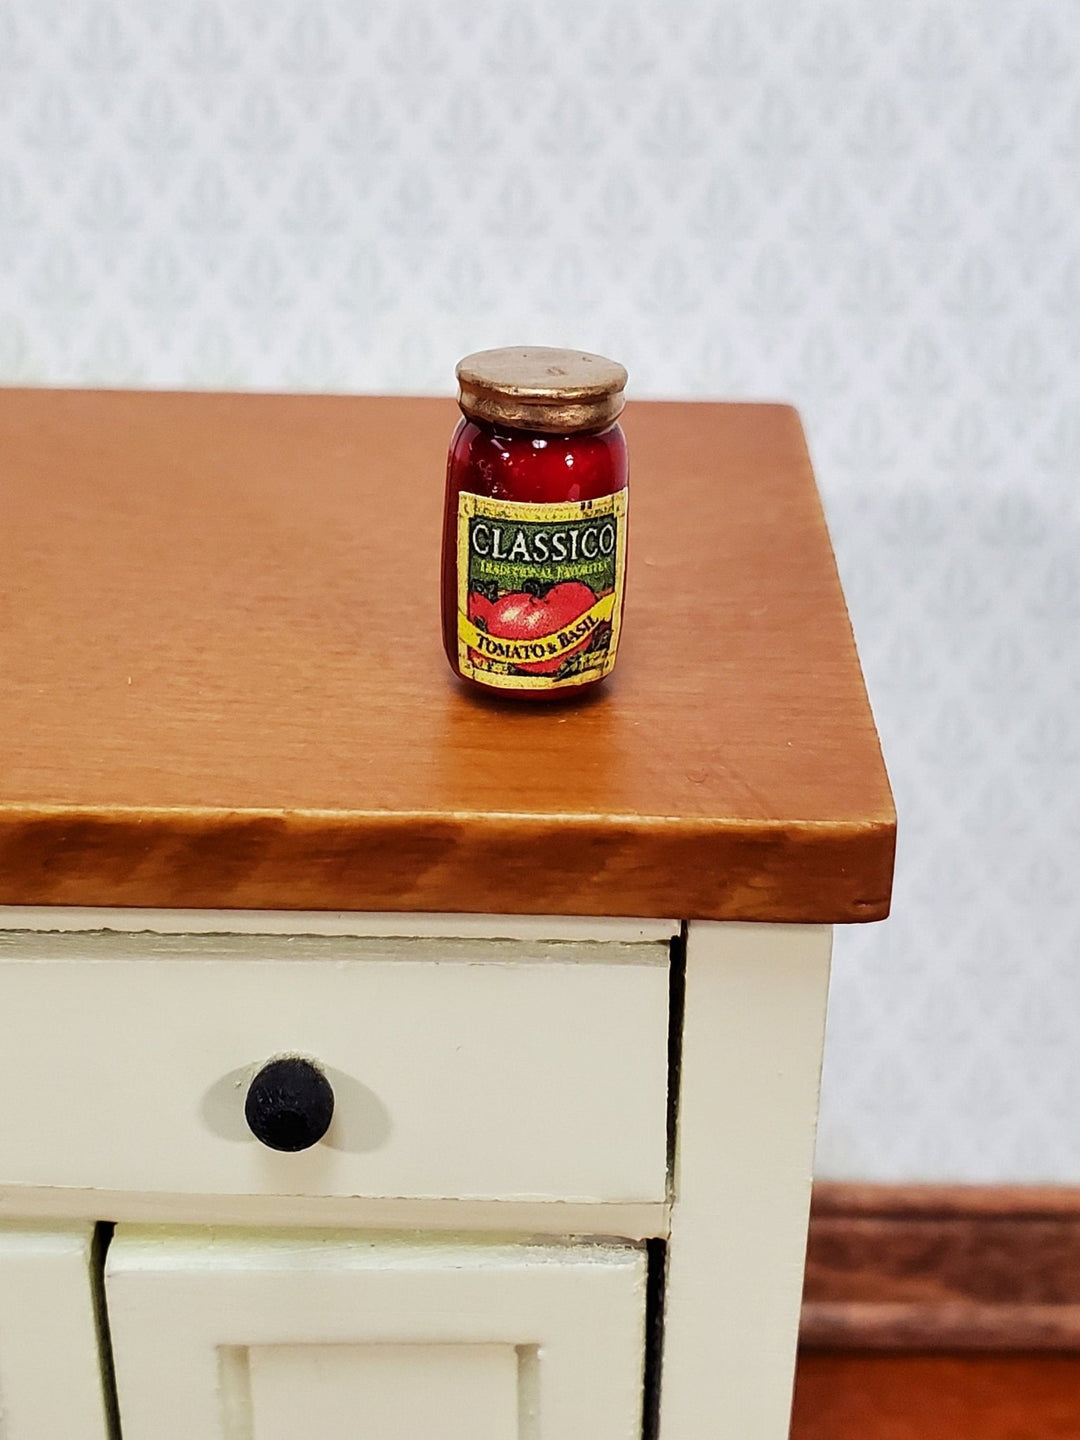 Dollhouse Pasta Sauce Tomato Basil Classico Jar 1:12 Scale Modern Miniature Kitchen Food - Miniature Crush